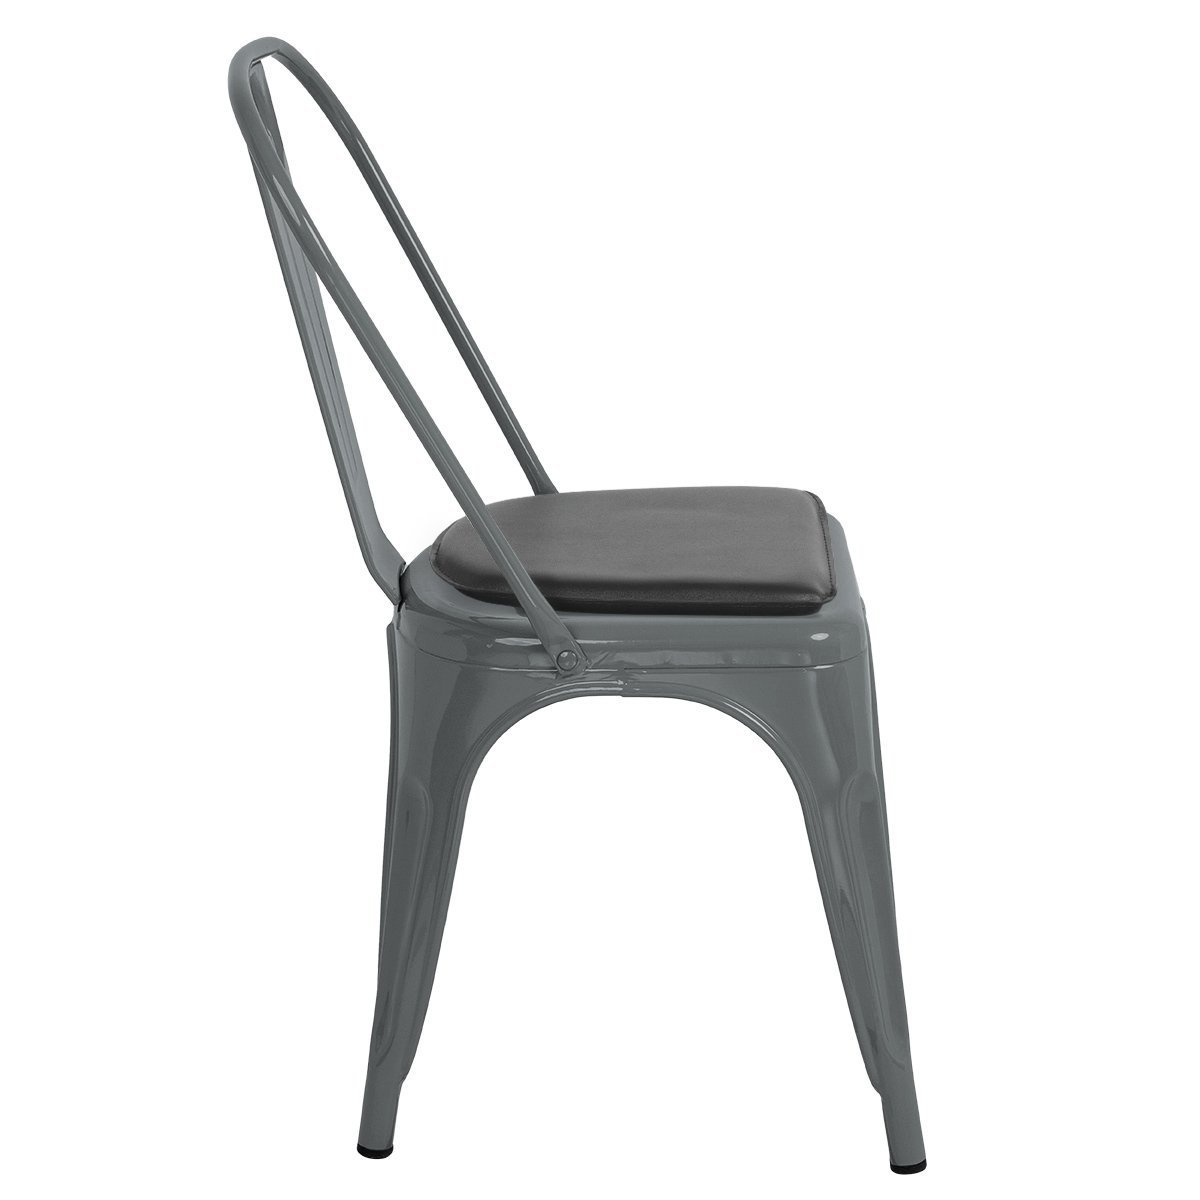 Cadeira Iron Tolix design industrial com almofada - 2